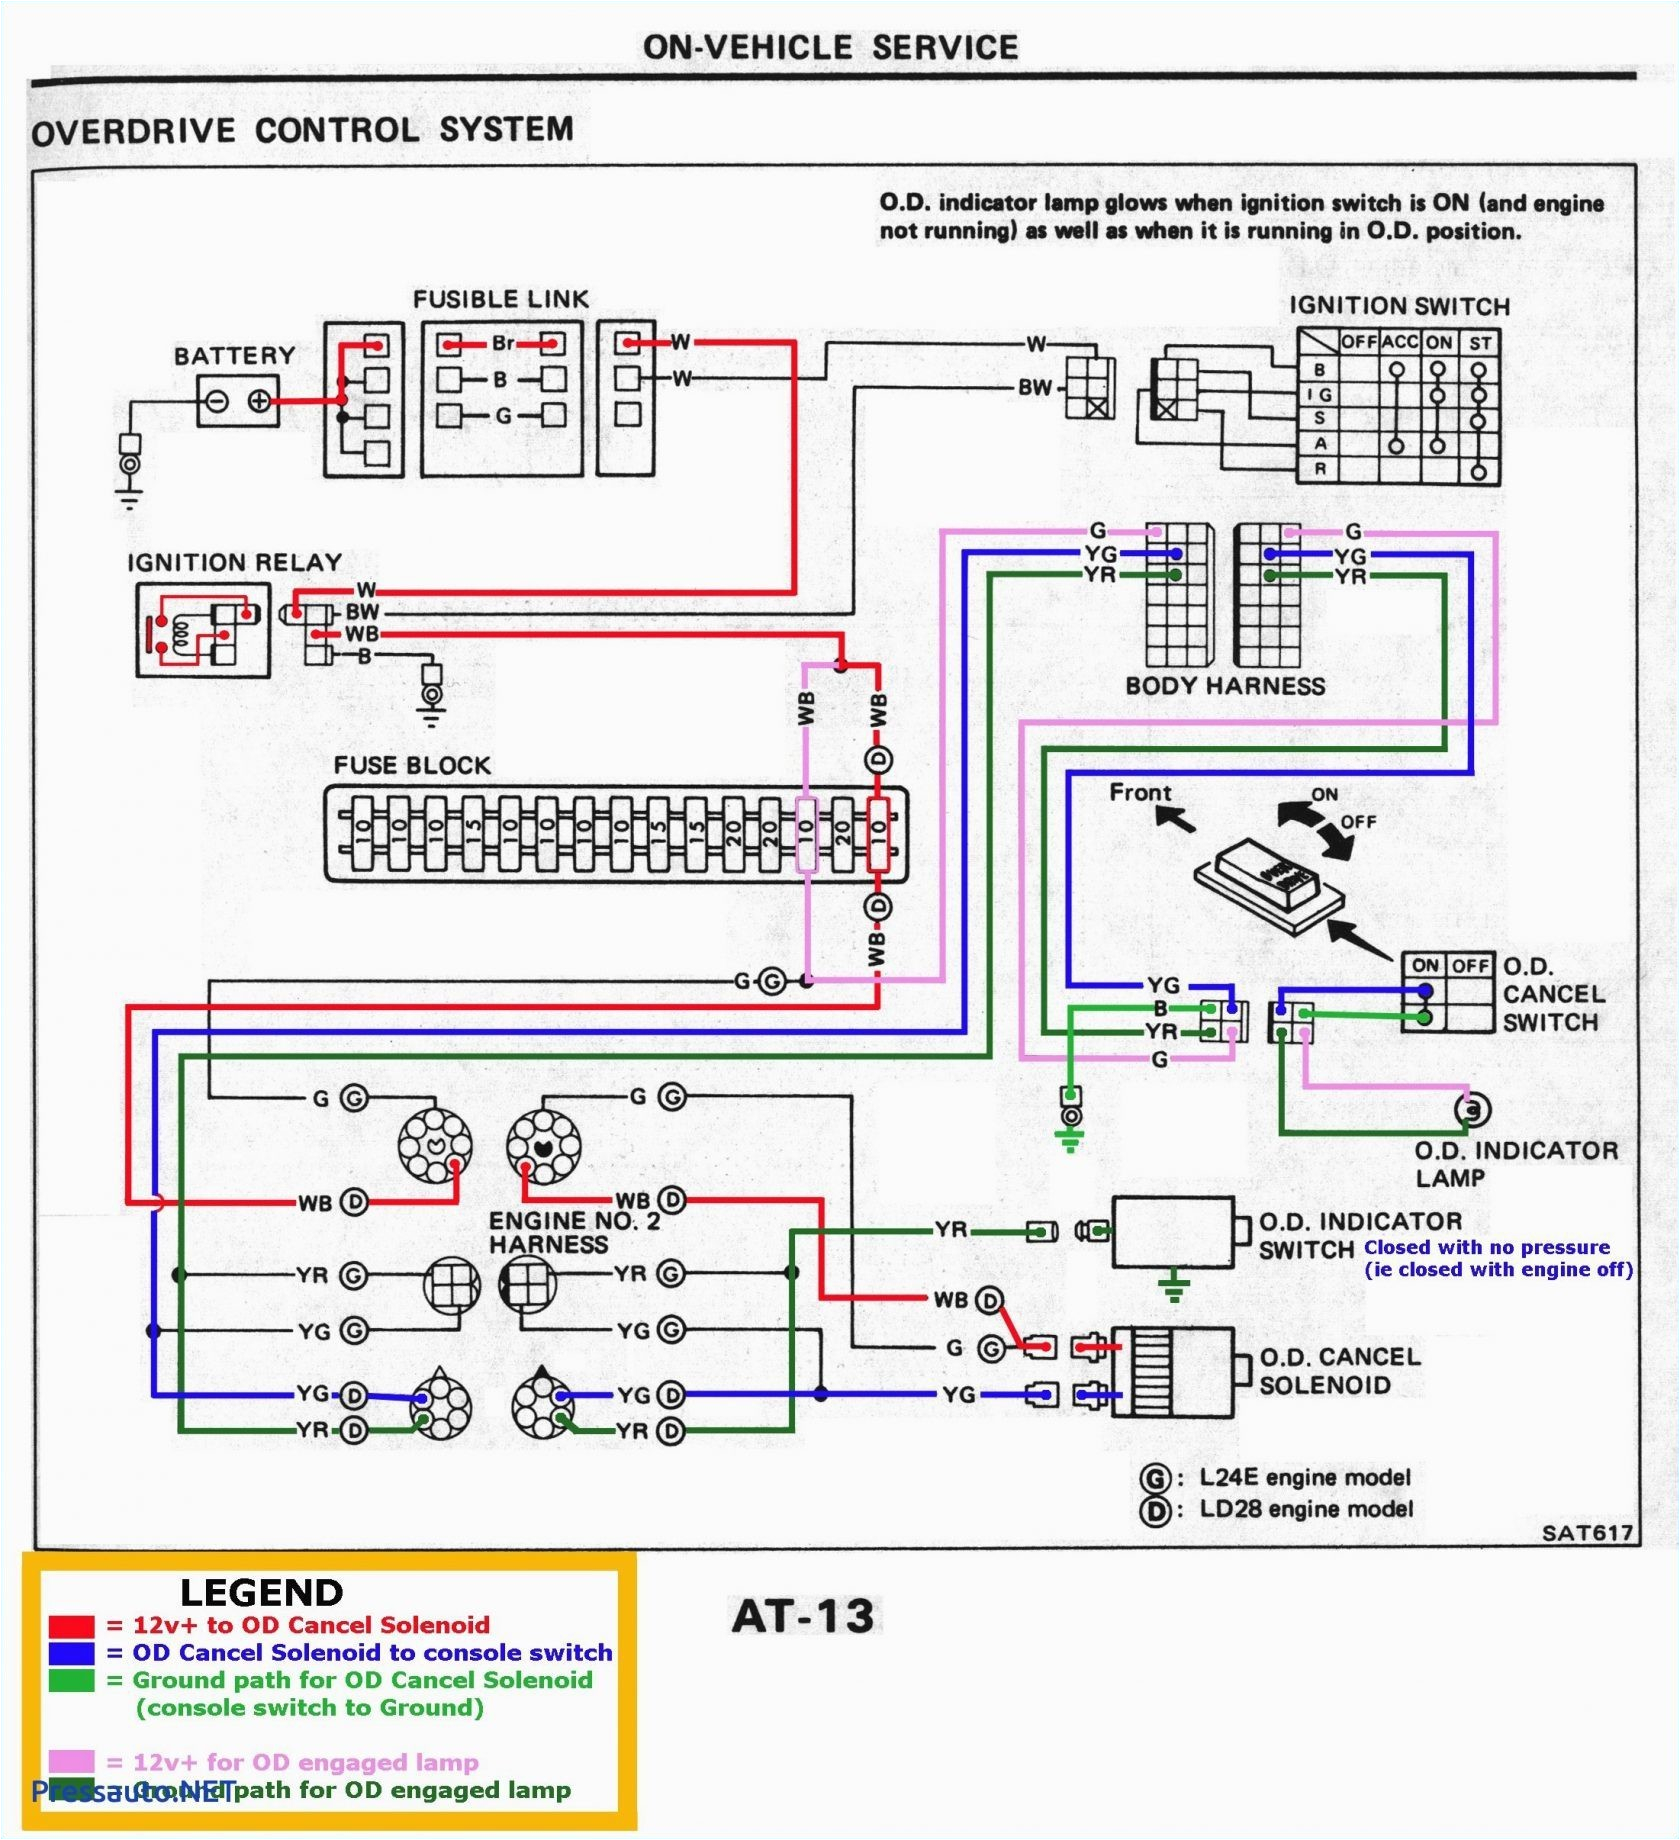 Code 3 Supervisor Wiring Diagram Code 3 Wiring Diagram Wiring Diagram